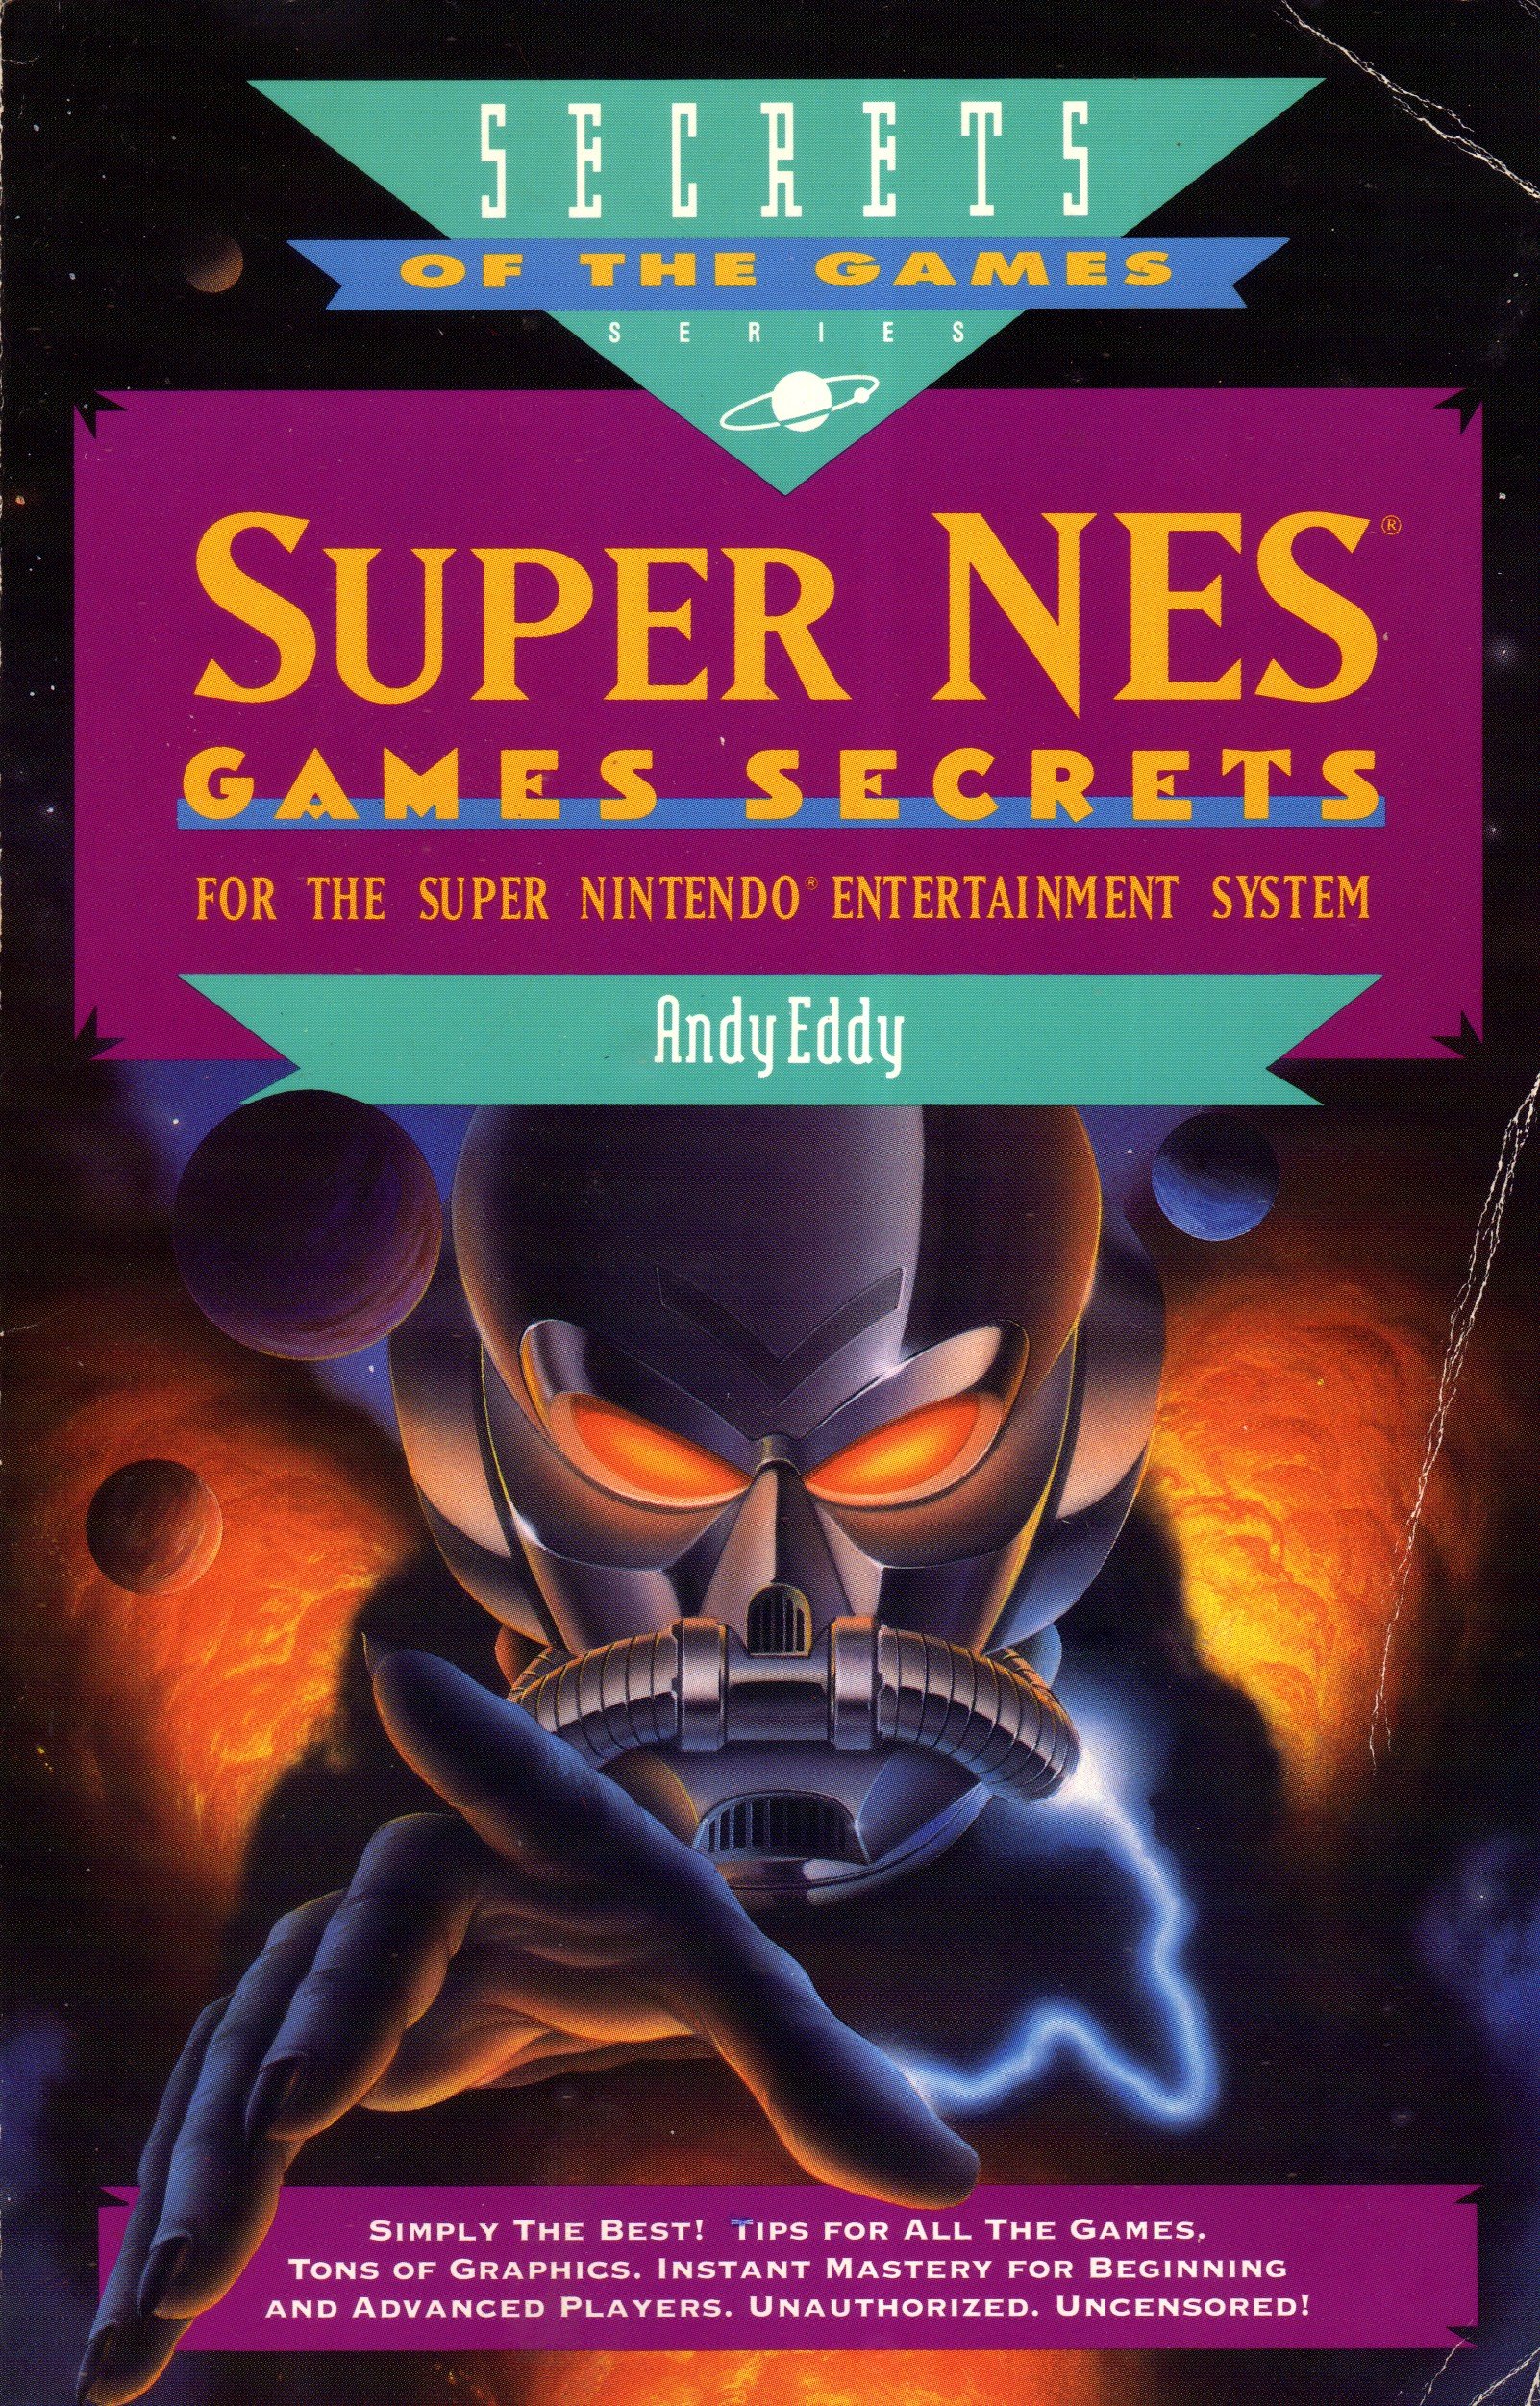 More information about "Super NES Games Secrets"